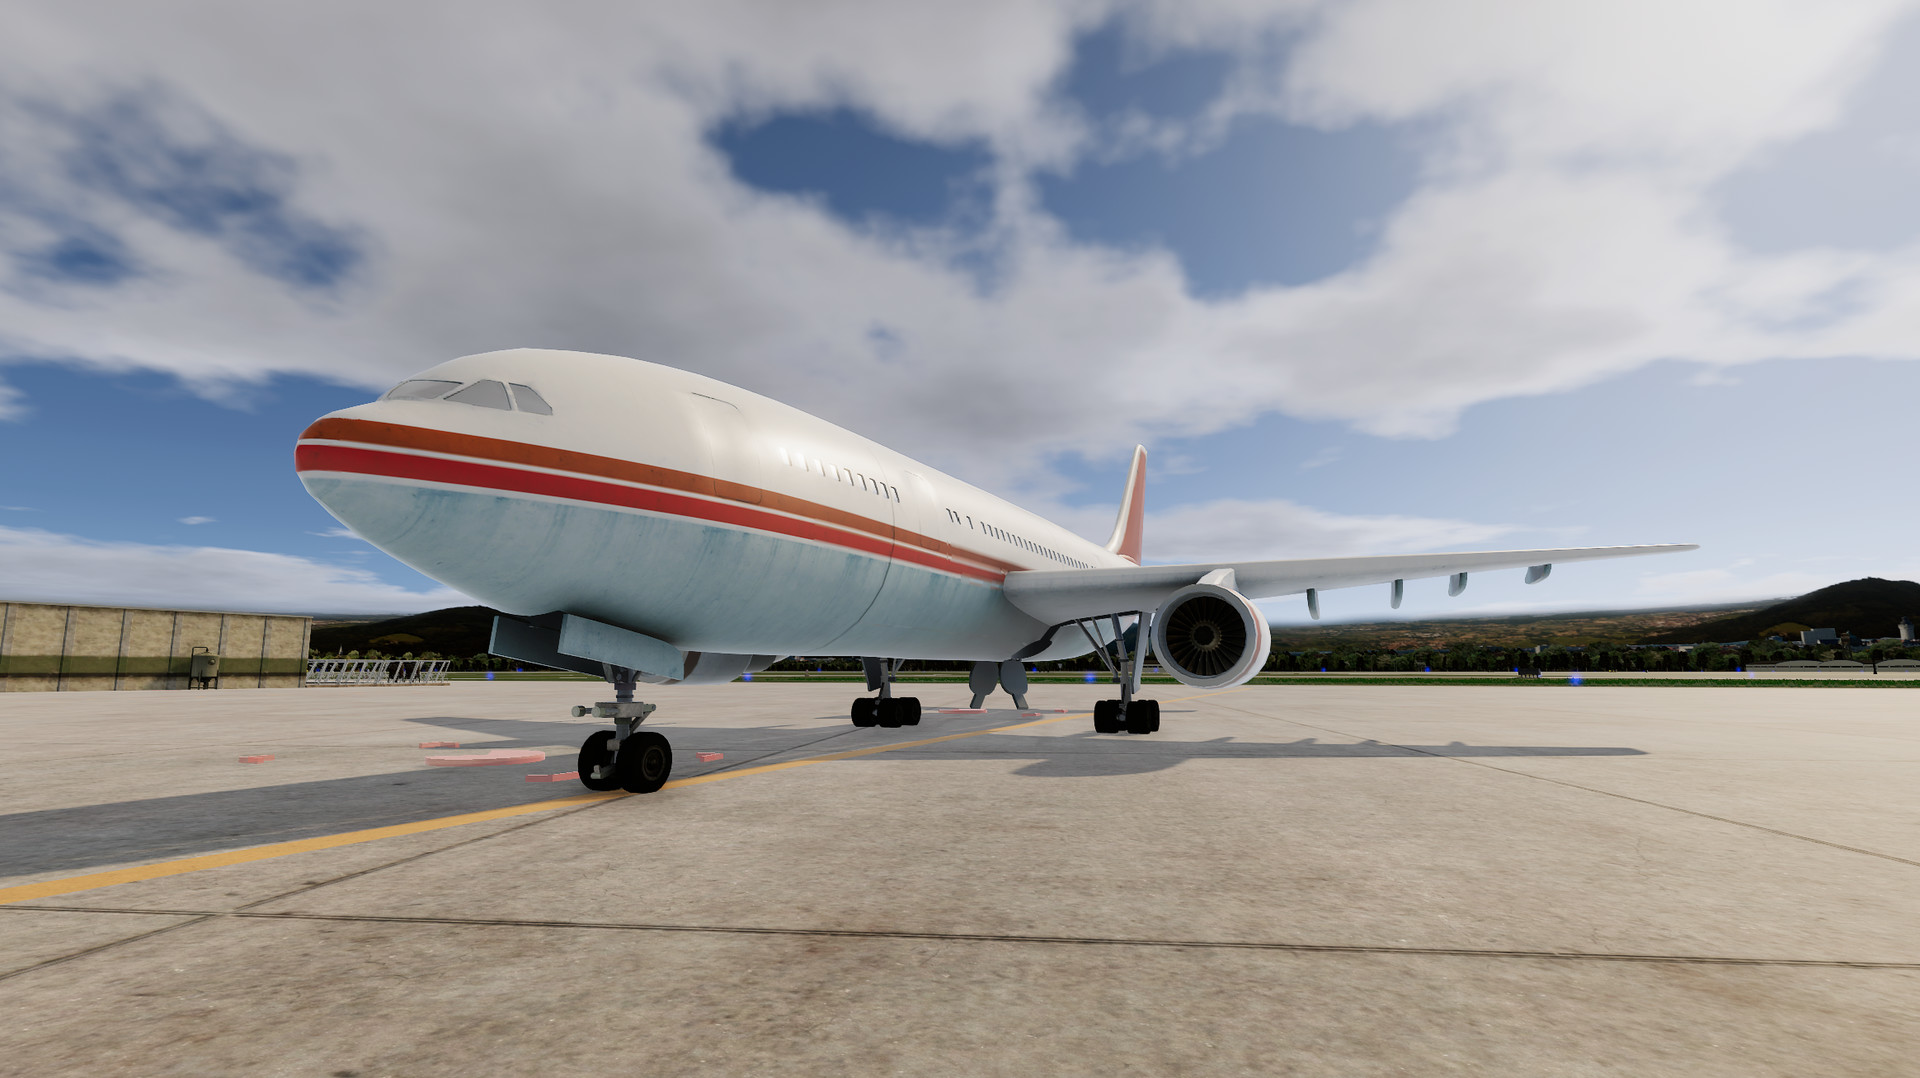 Airport Simulator 2019 on Steam